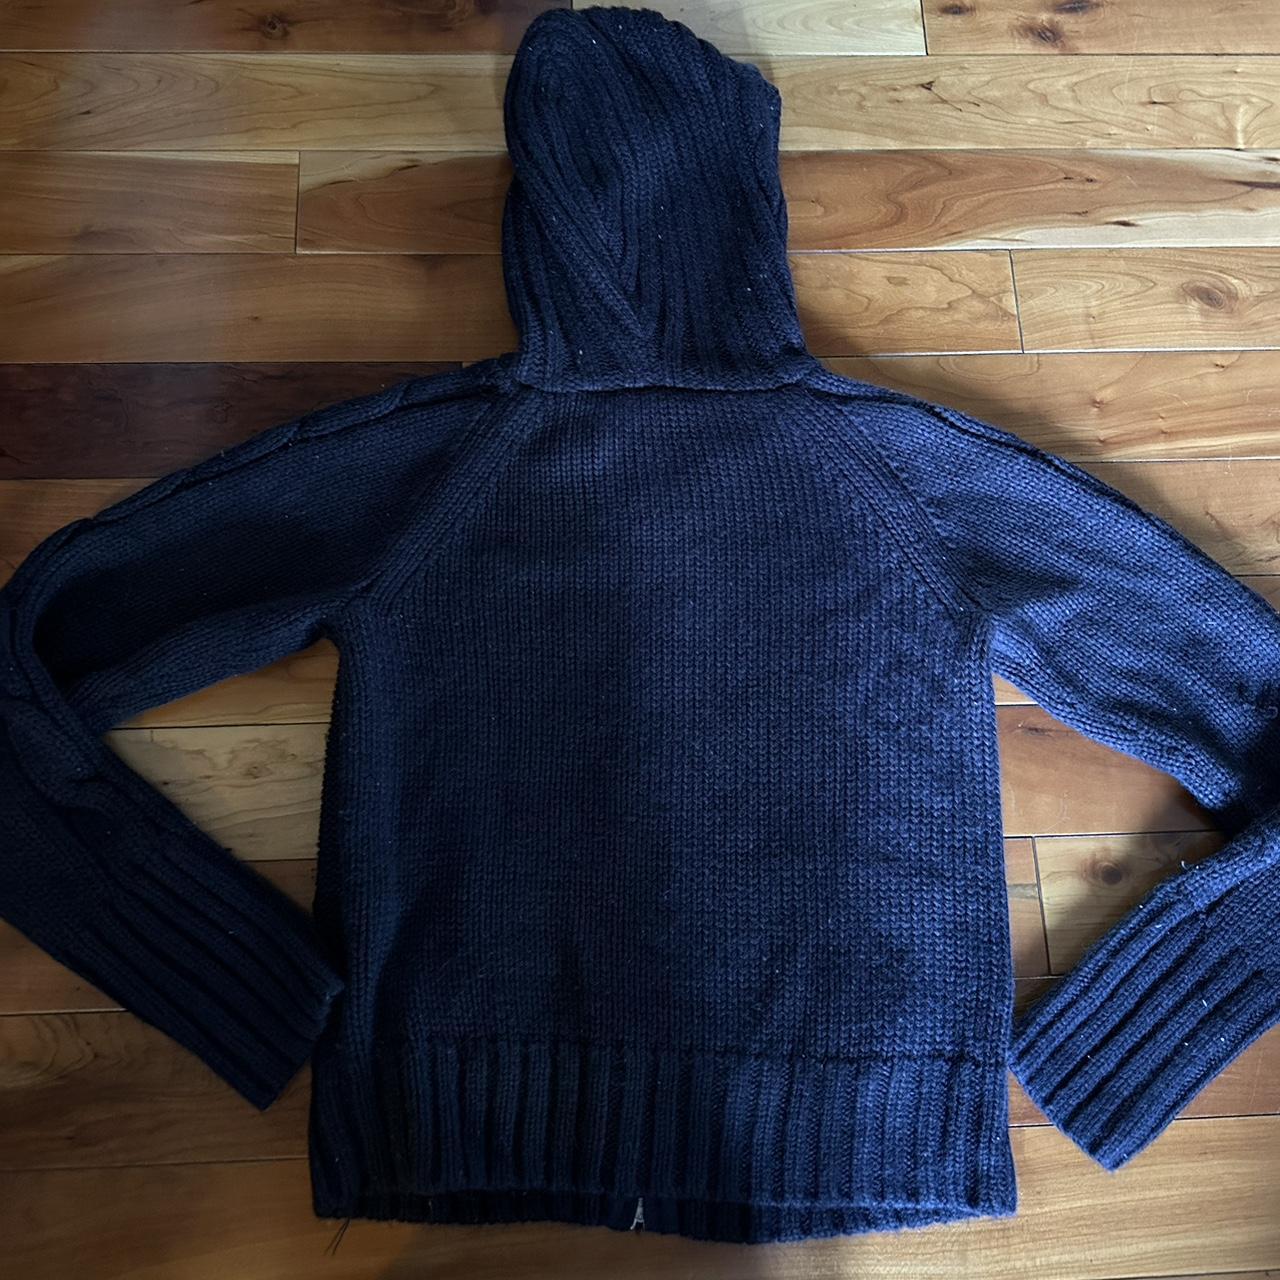 cute navy blue knit zip up sweater/cardigan - has a... - Depop